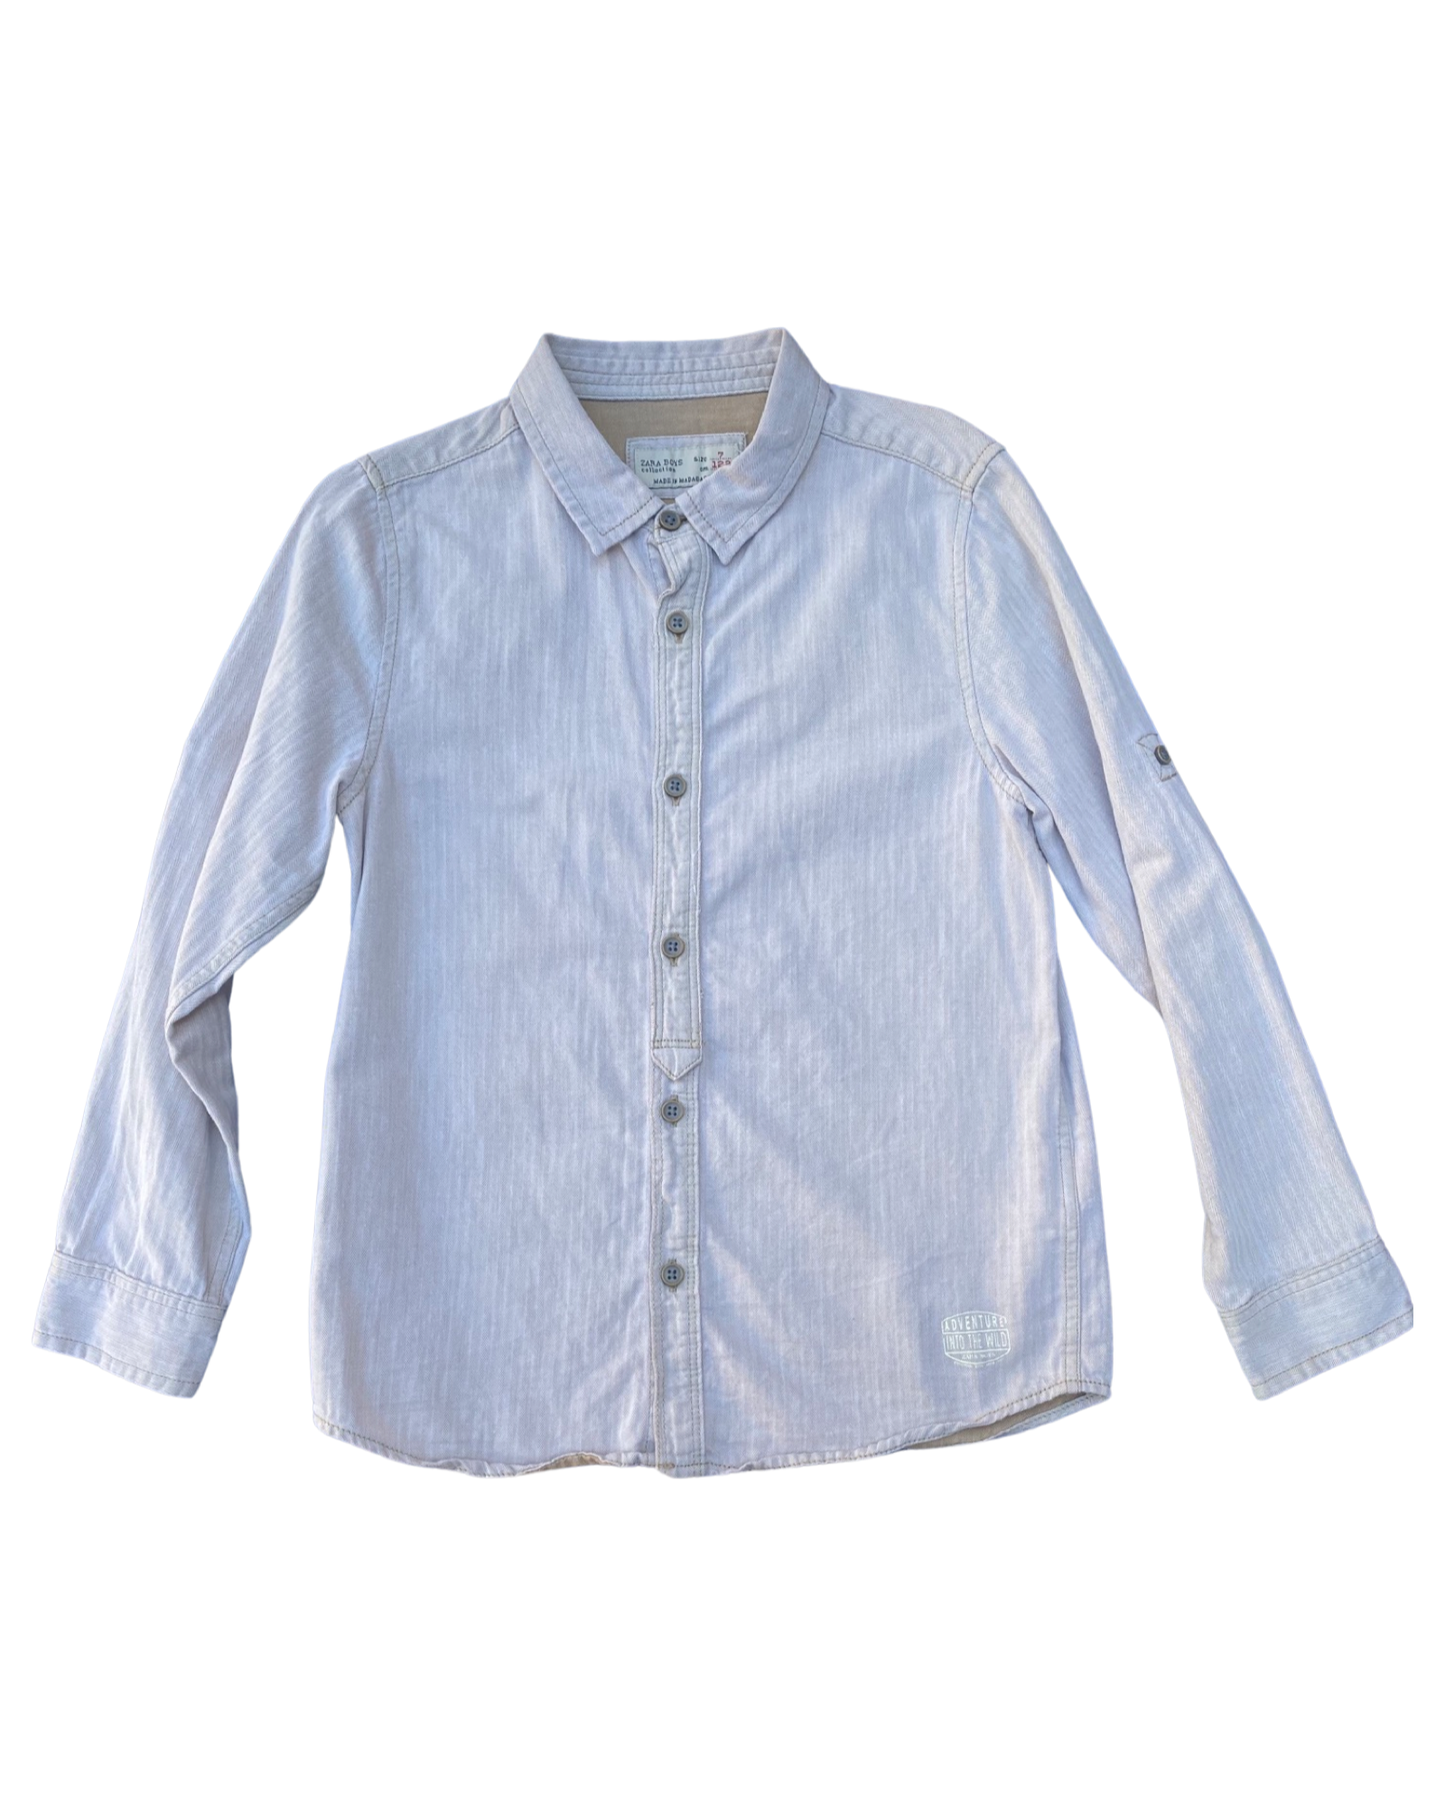 Zara cream cotton shirt (size 6-7yrs)